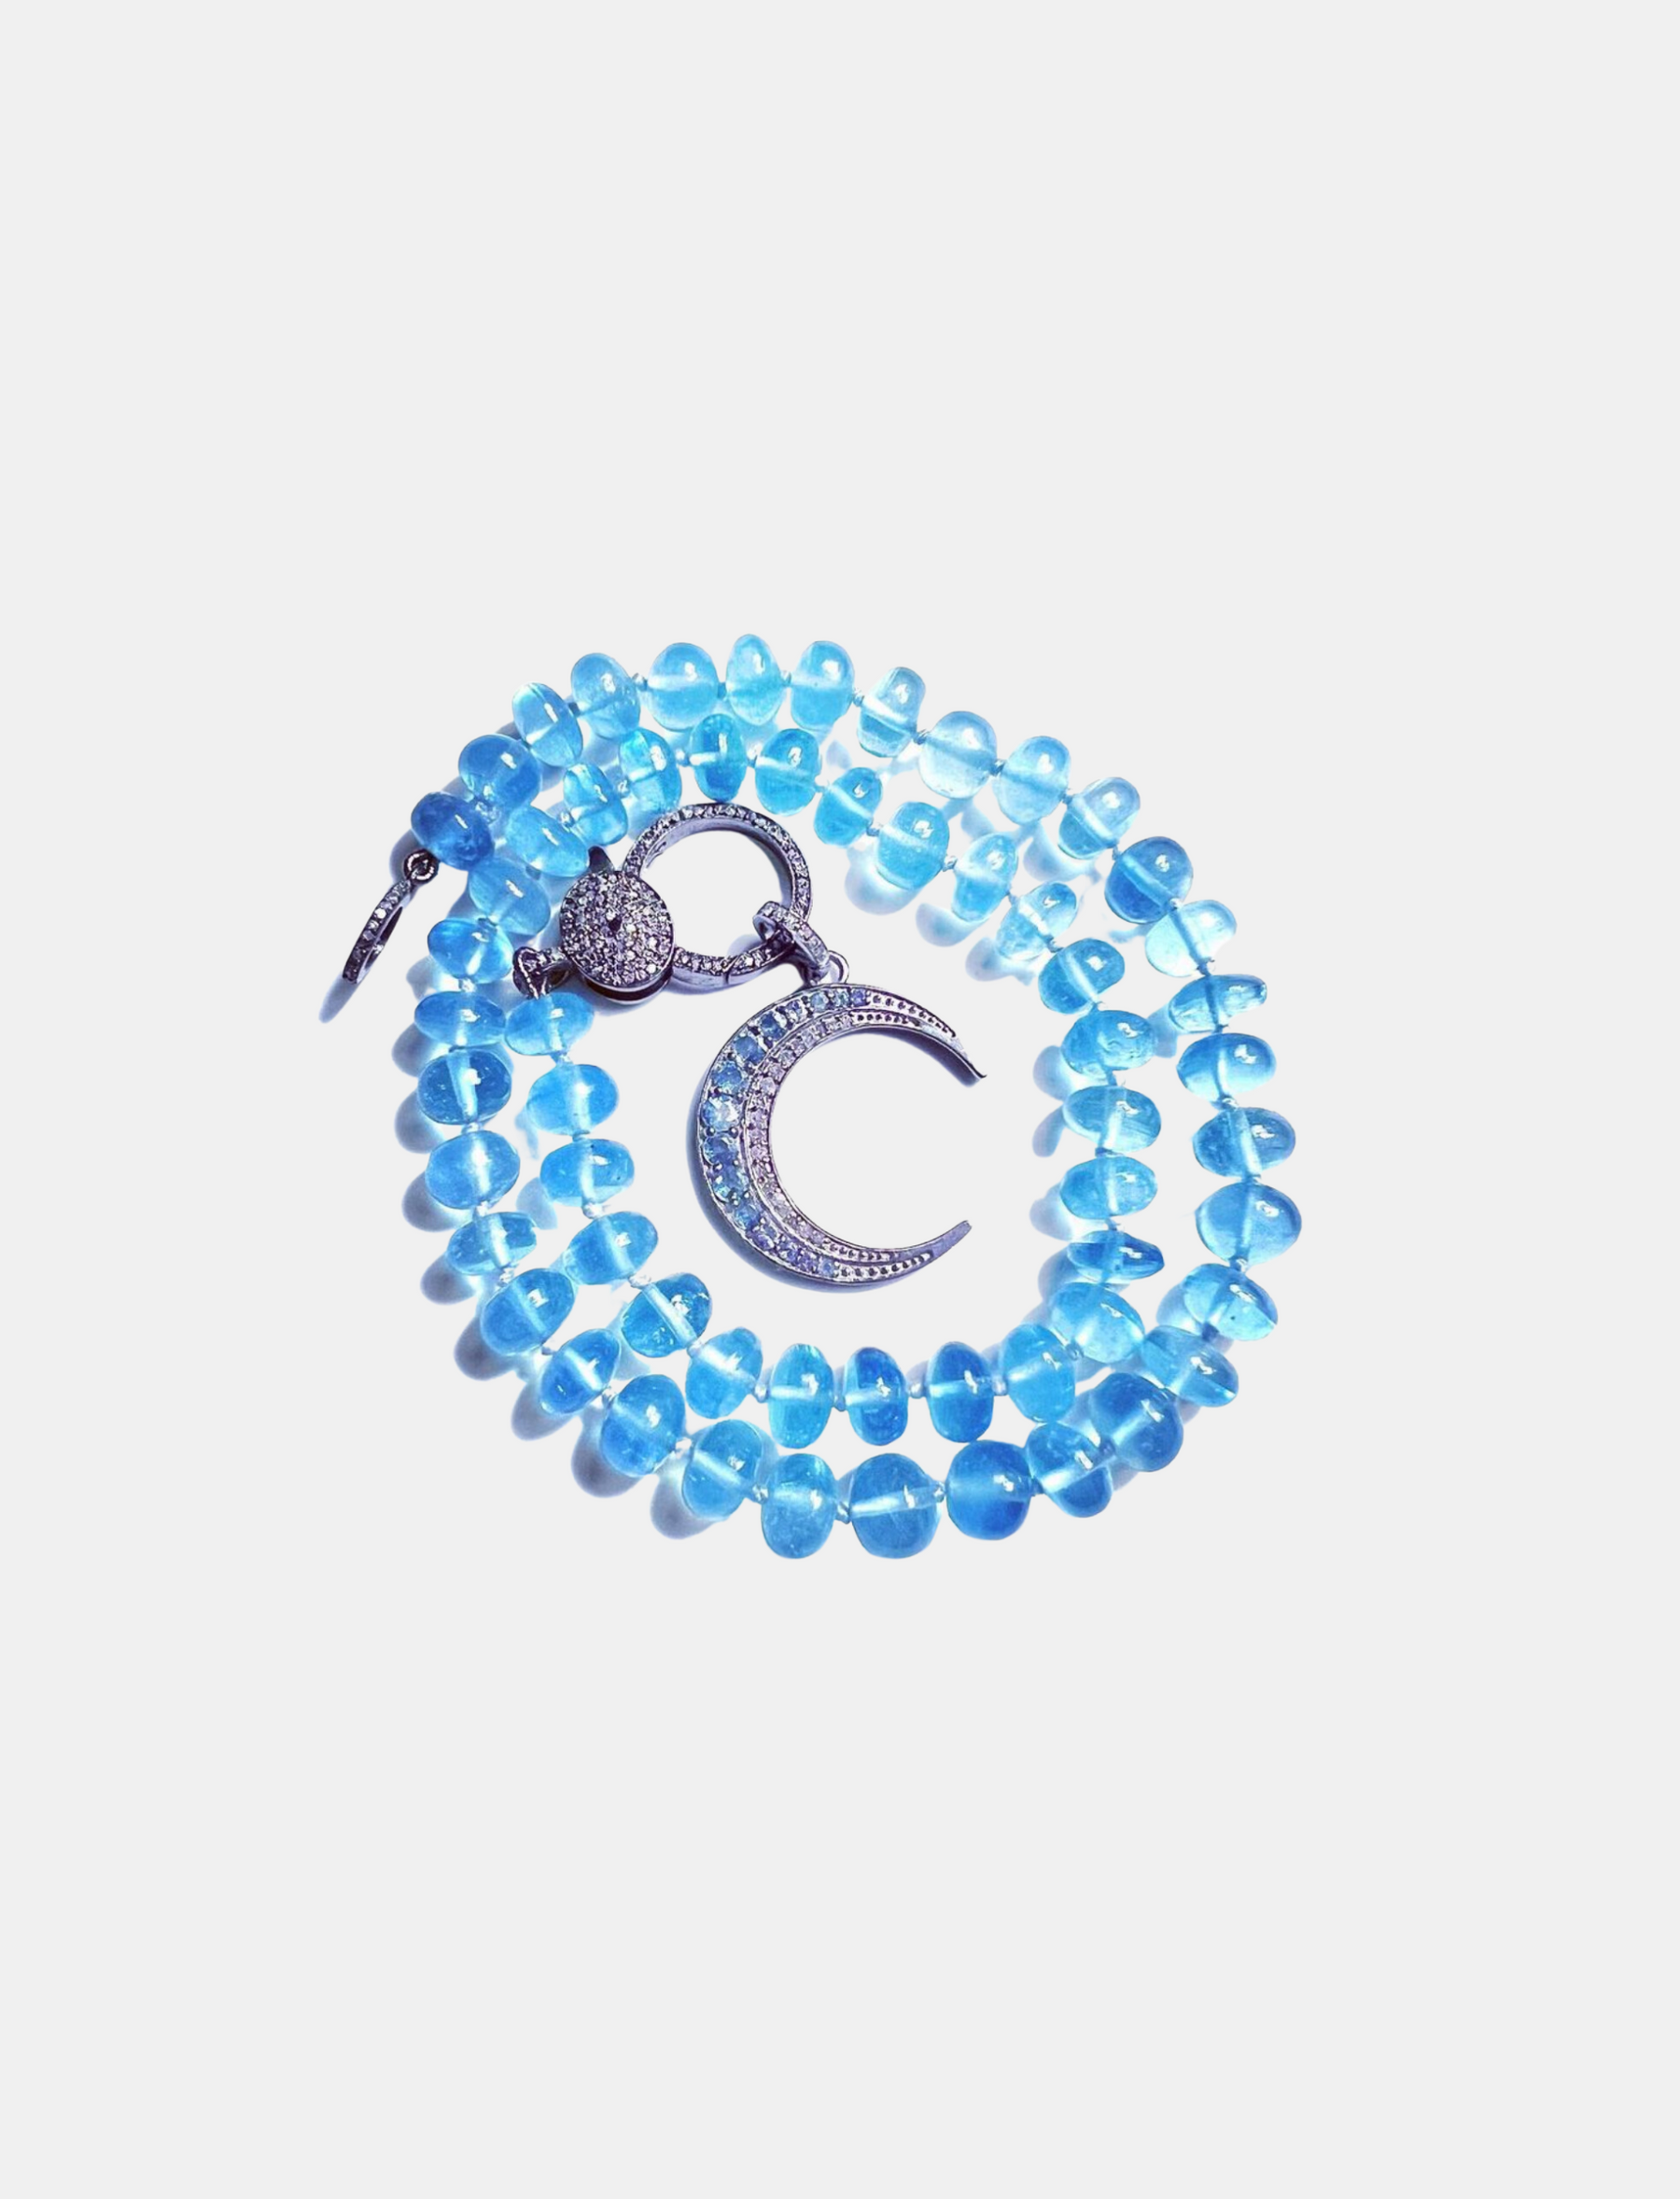 Aquamarine Knotted Necklace, Large Pave Diamond Clasp, Aquamarine & Pave Diamond Moon